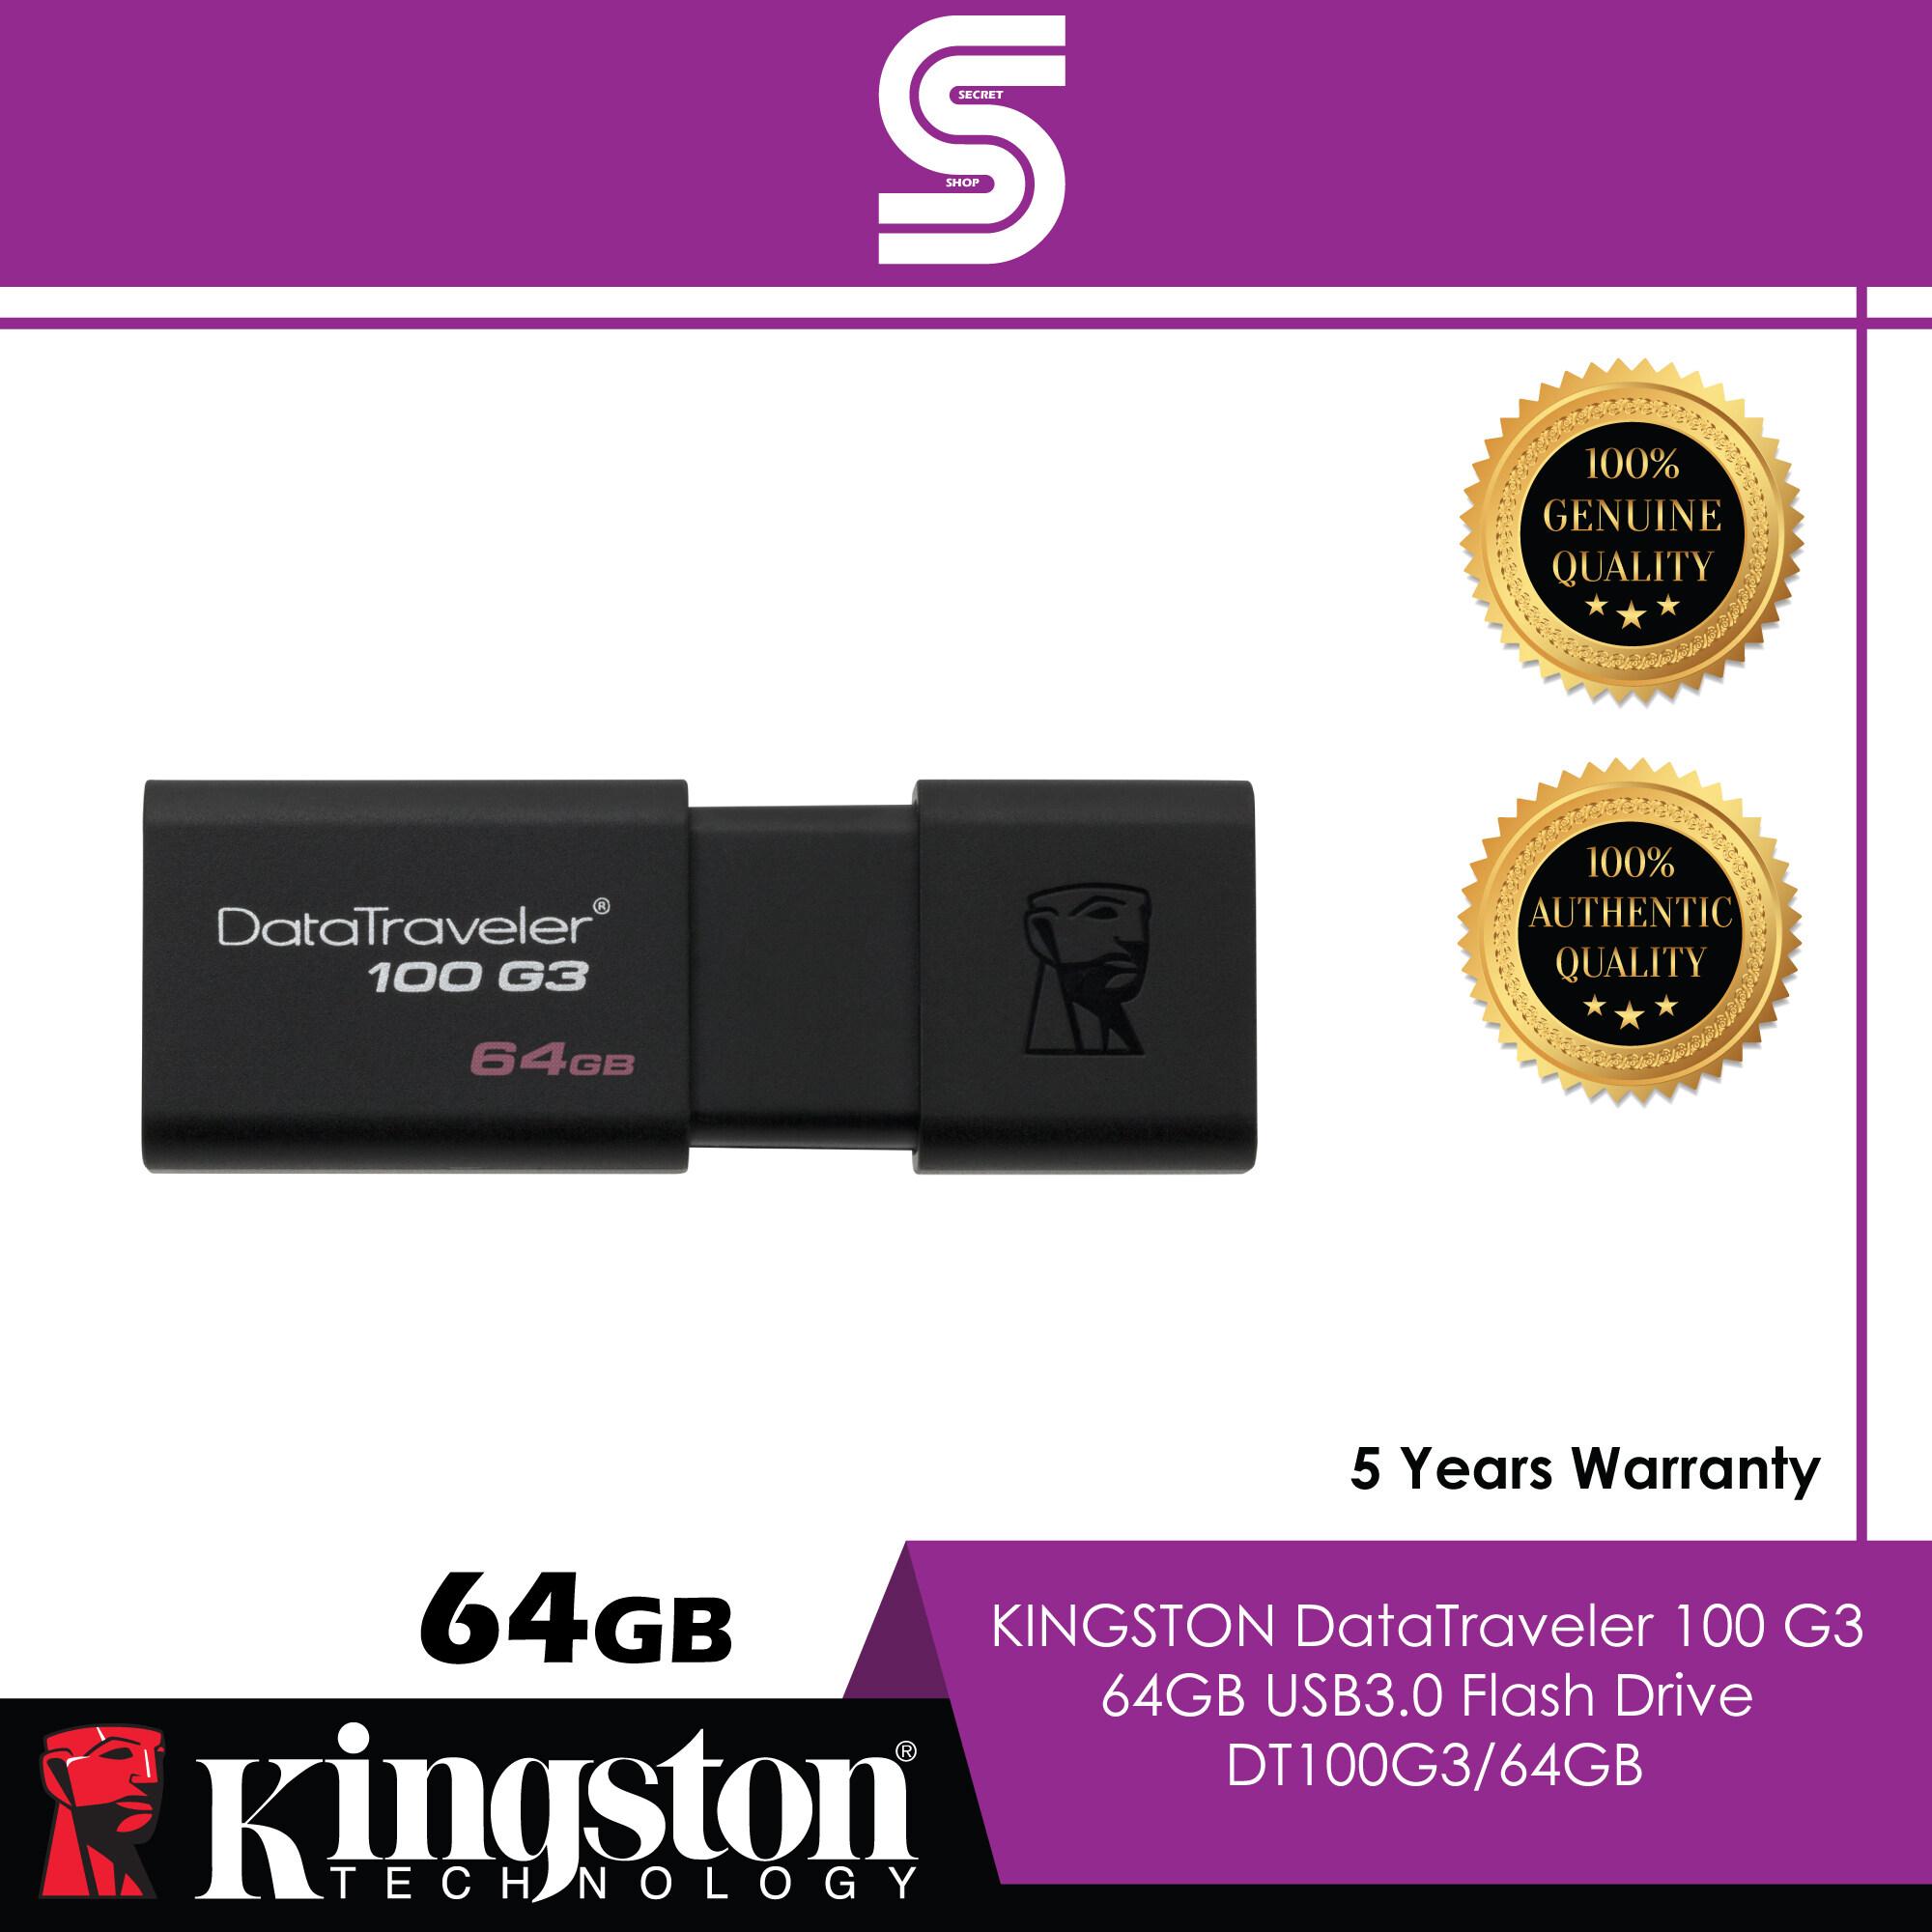 Kingston DataTraveler 100 G3 64GB USB3.0 Flash Drive - DT100G3/64GB